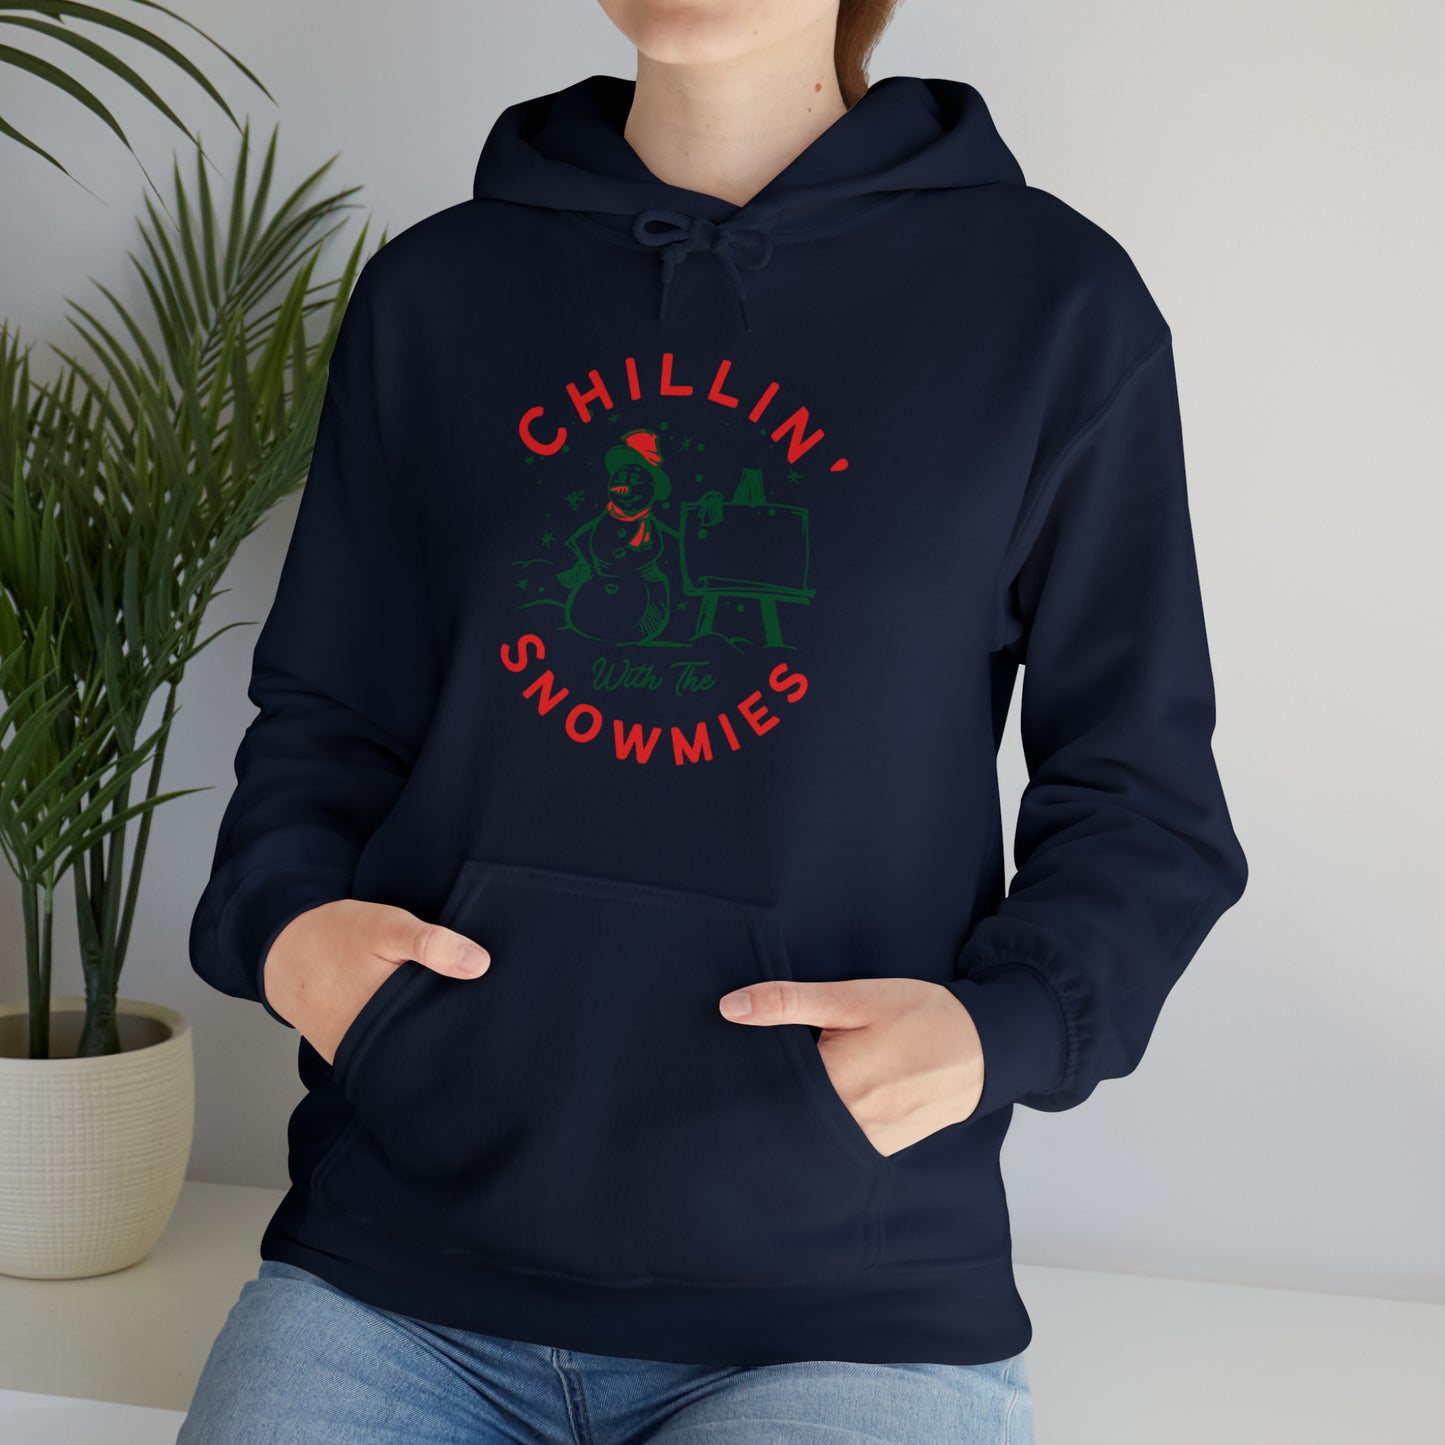 Chillin With The Snowmies Hoodie Sweatshirt